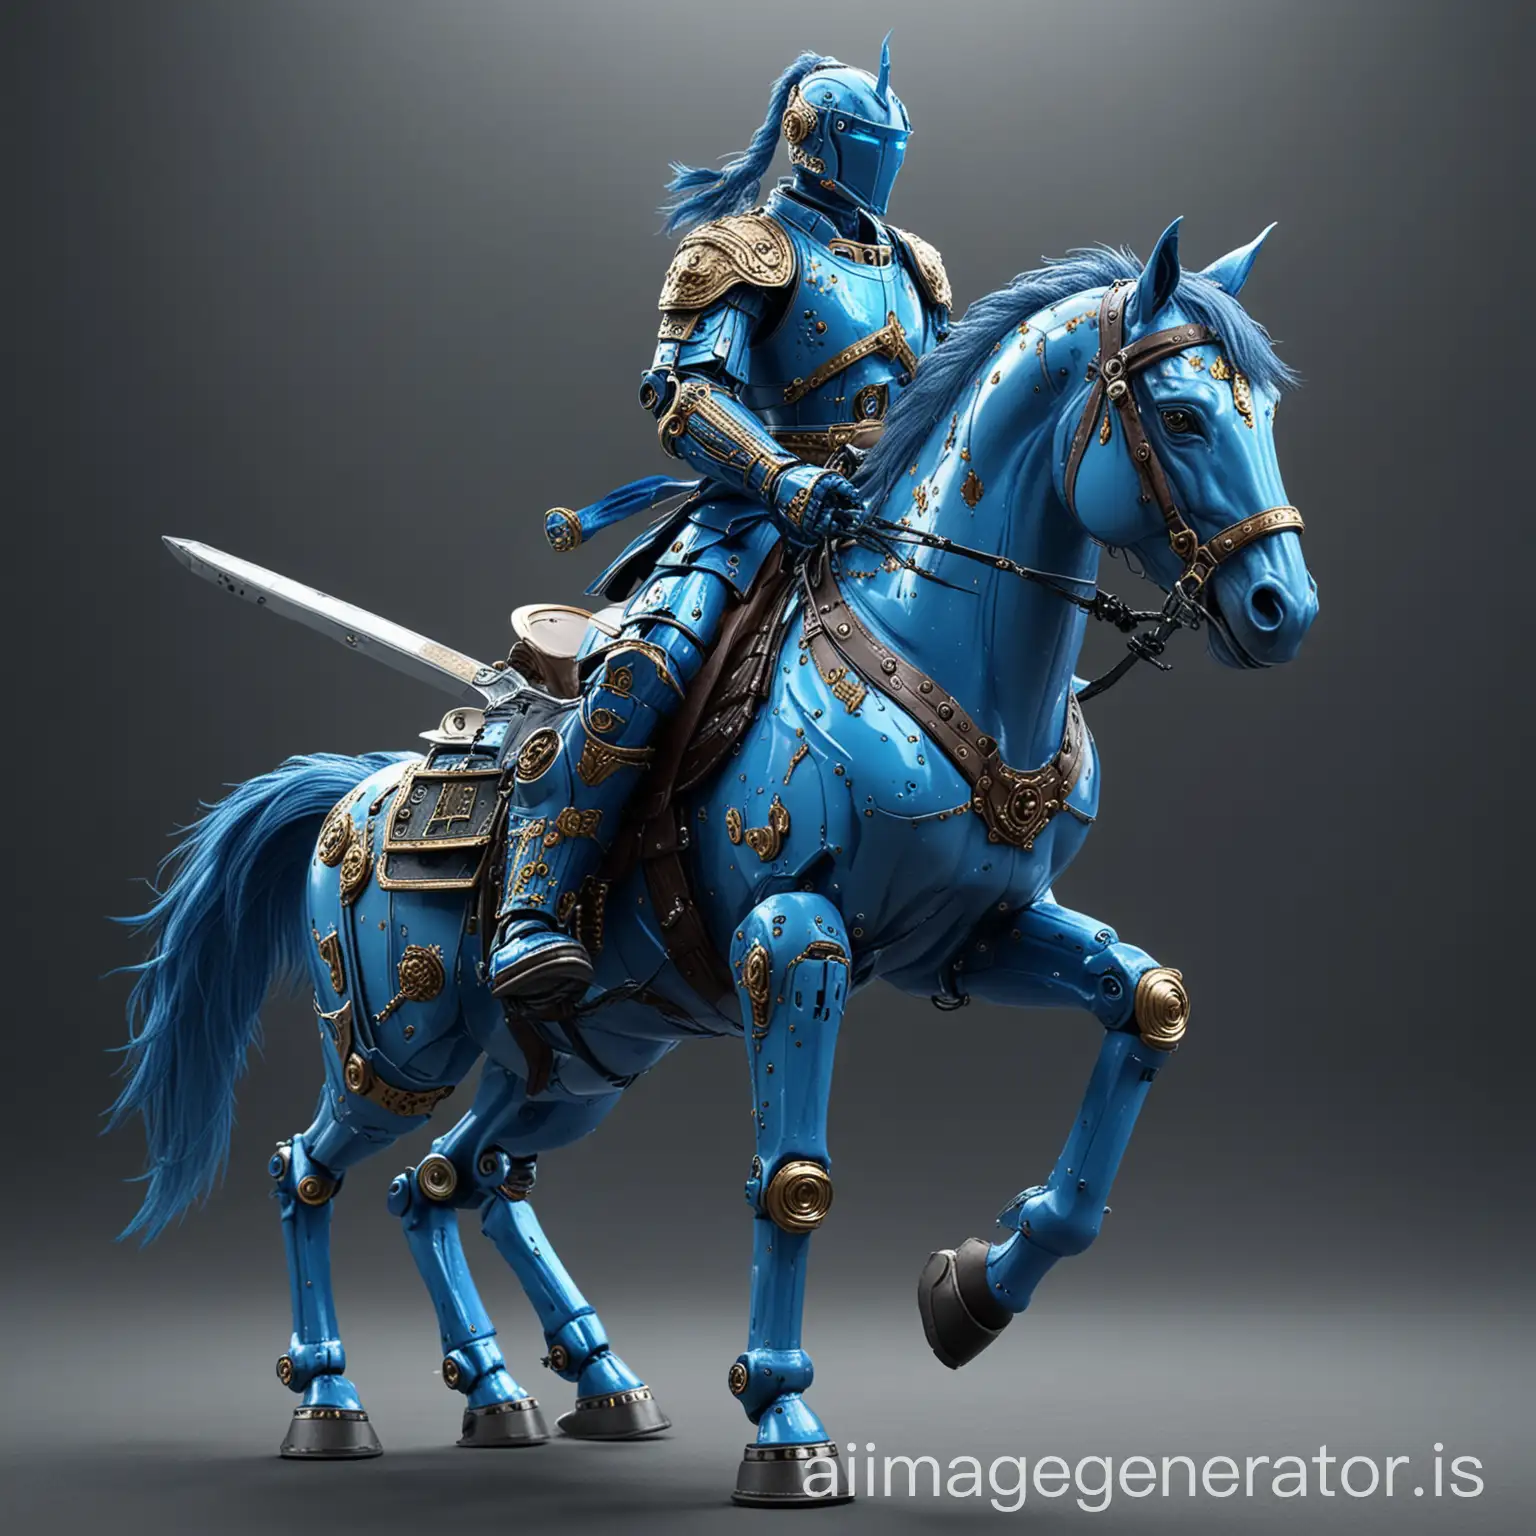 Blue money robot ride horse with sword